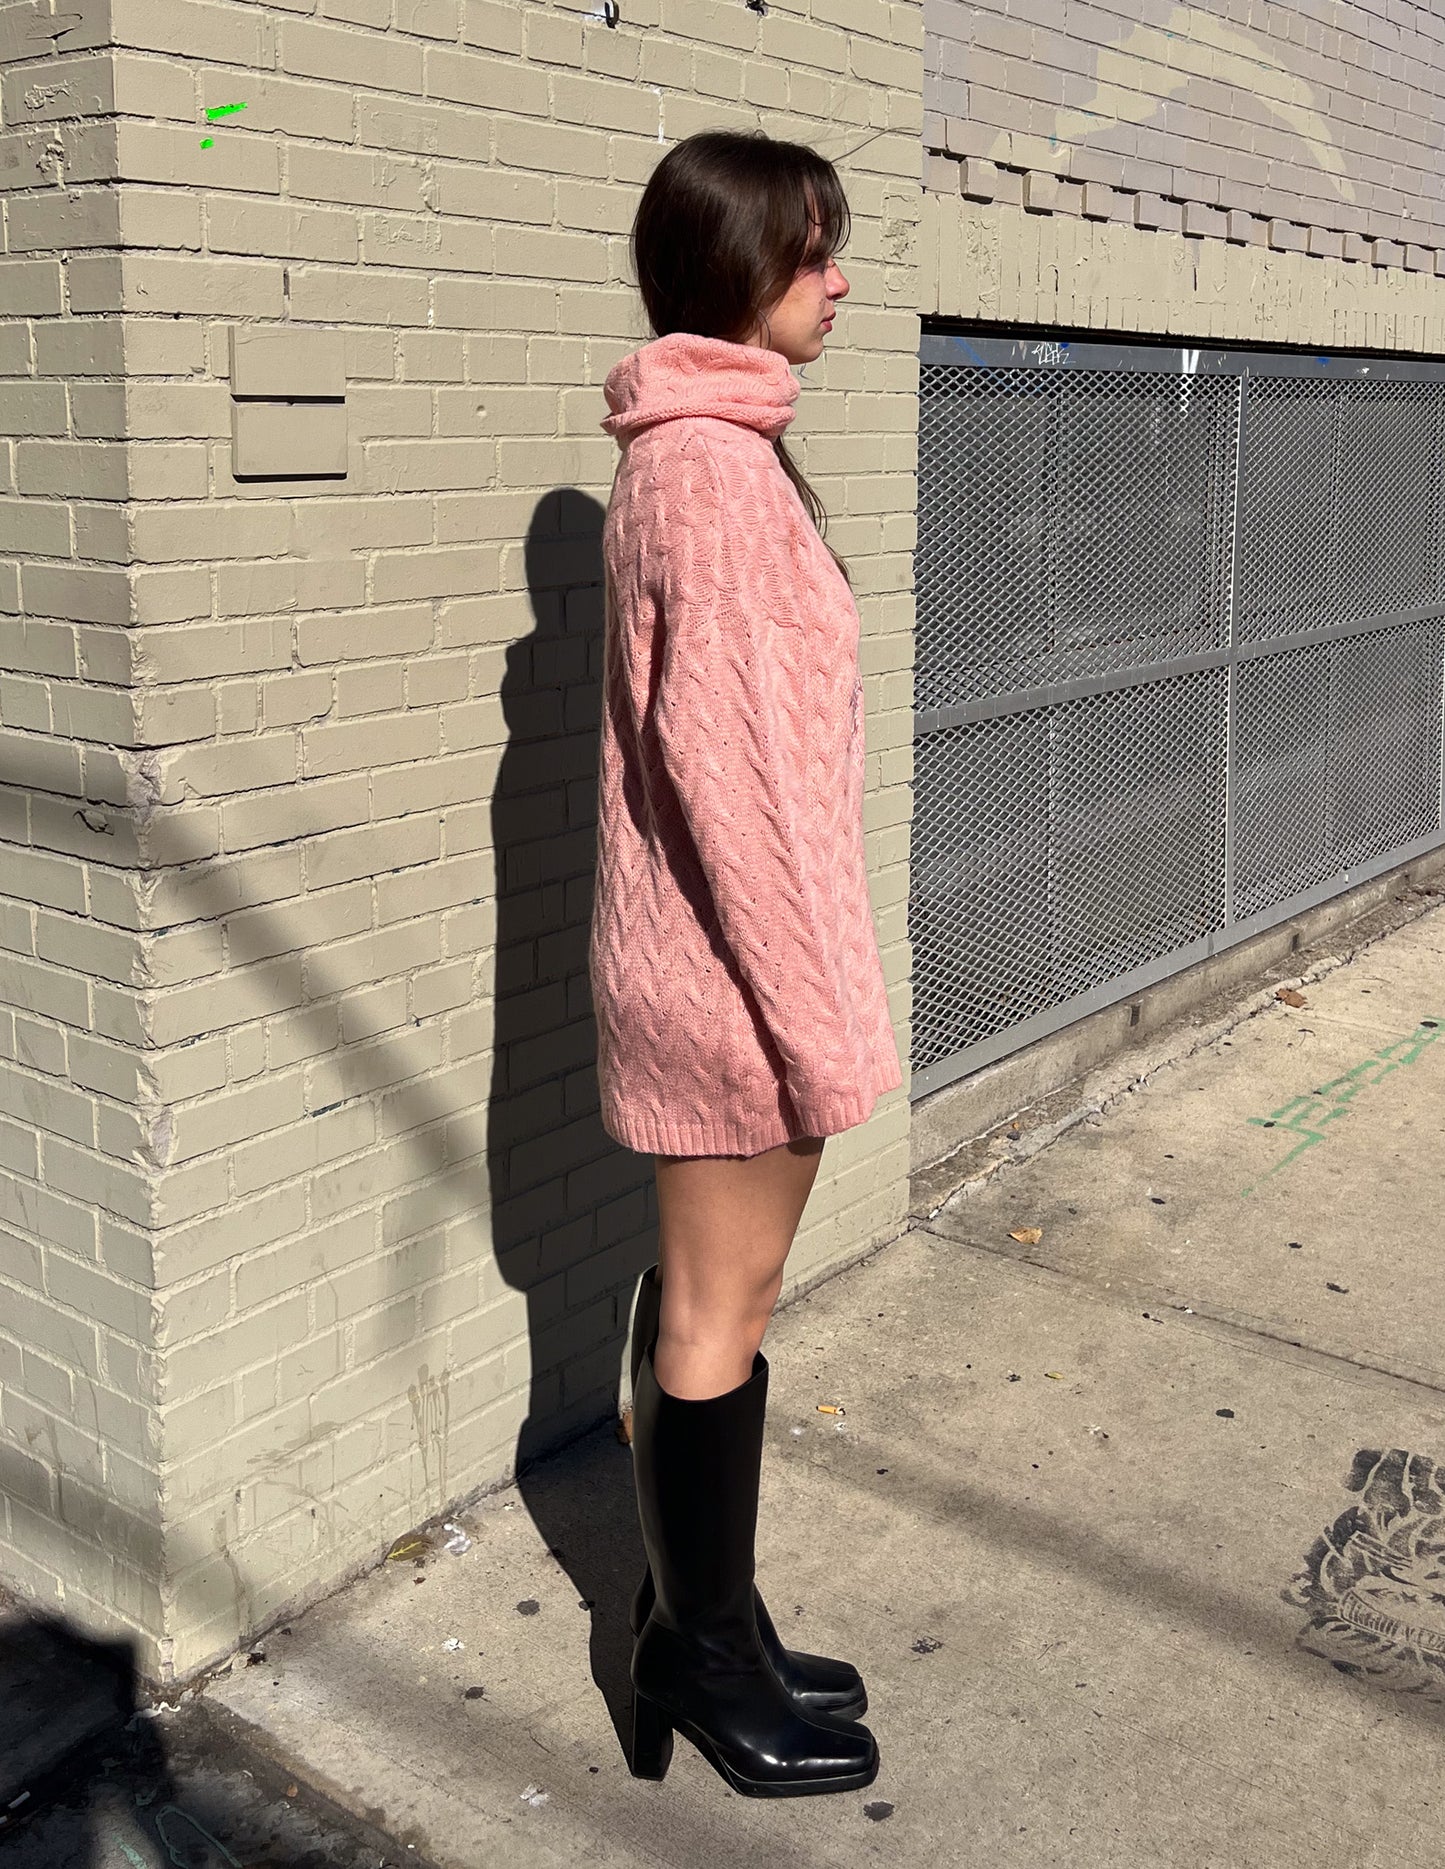 Versace Jeans Pink Knit Turtleneck Sweater Dress